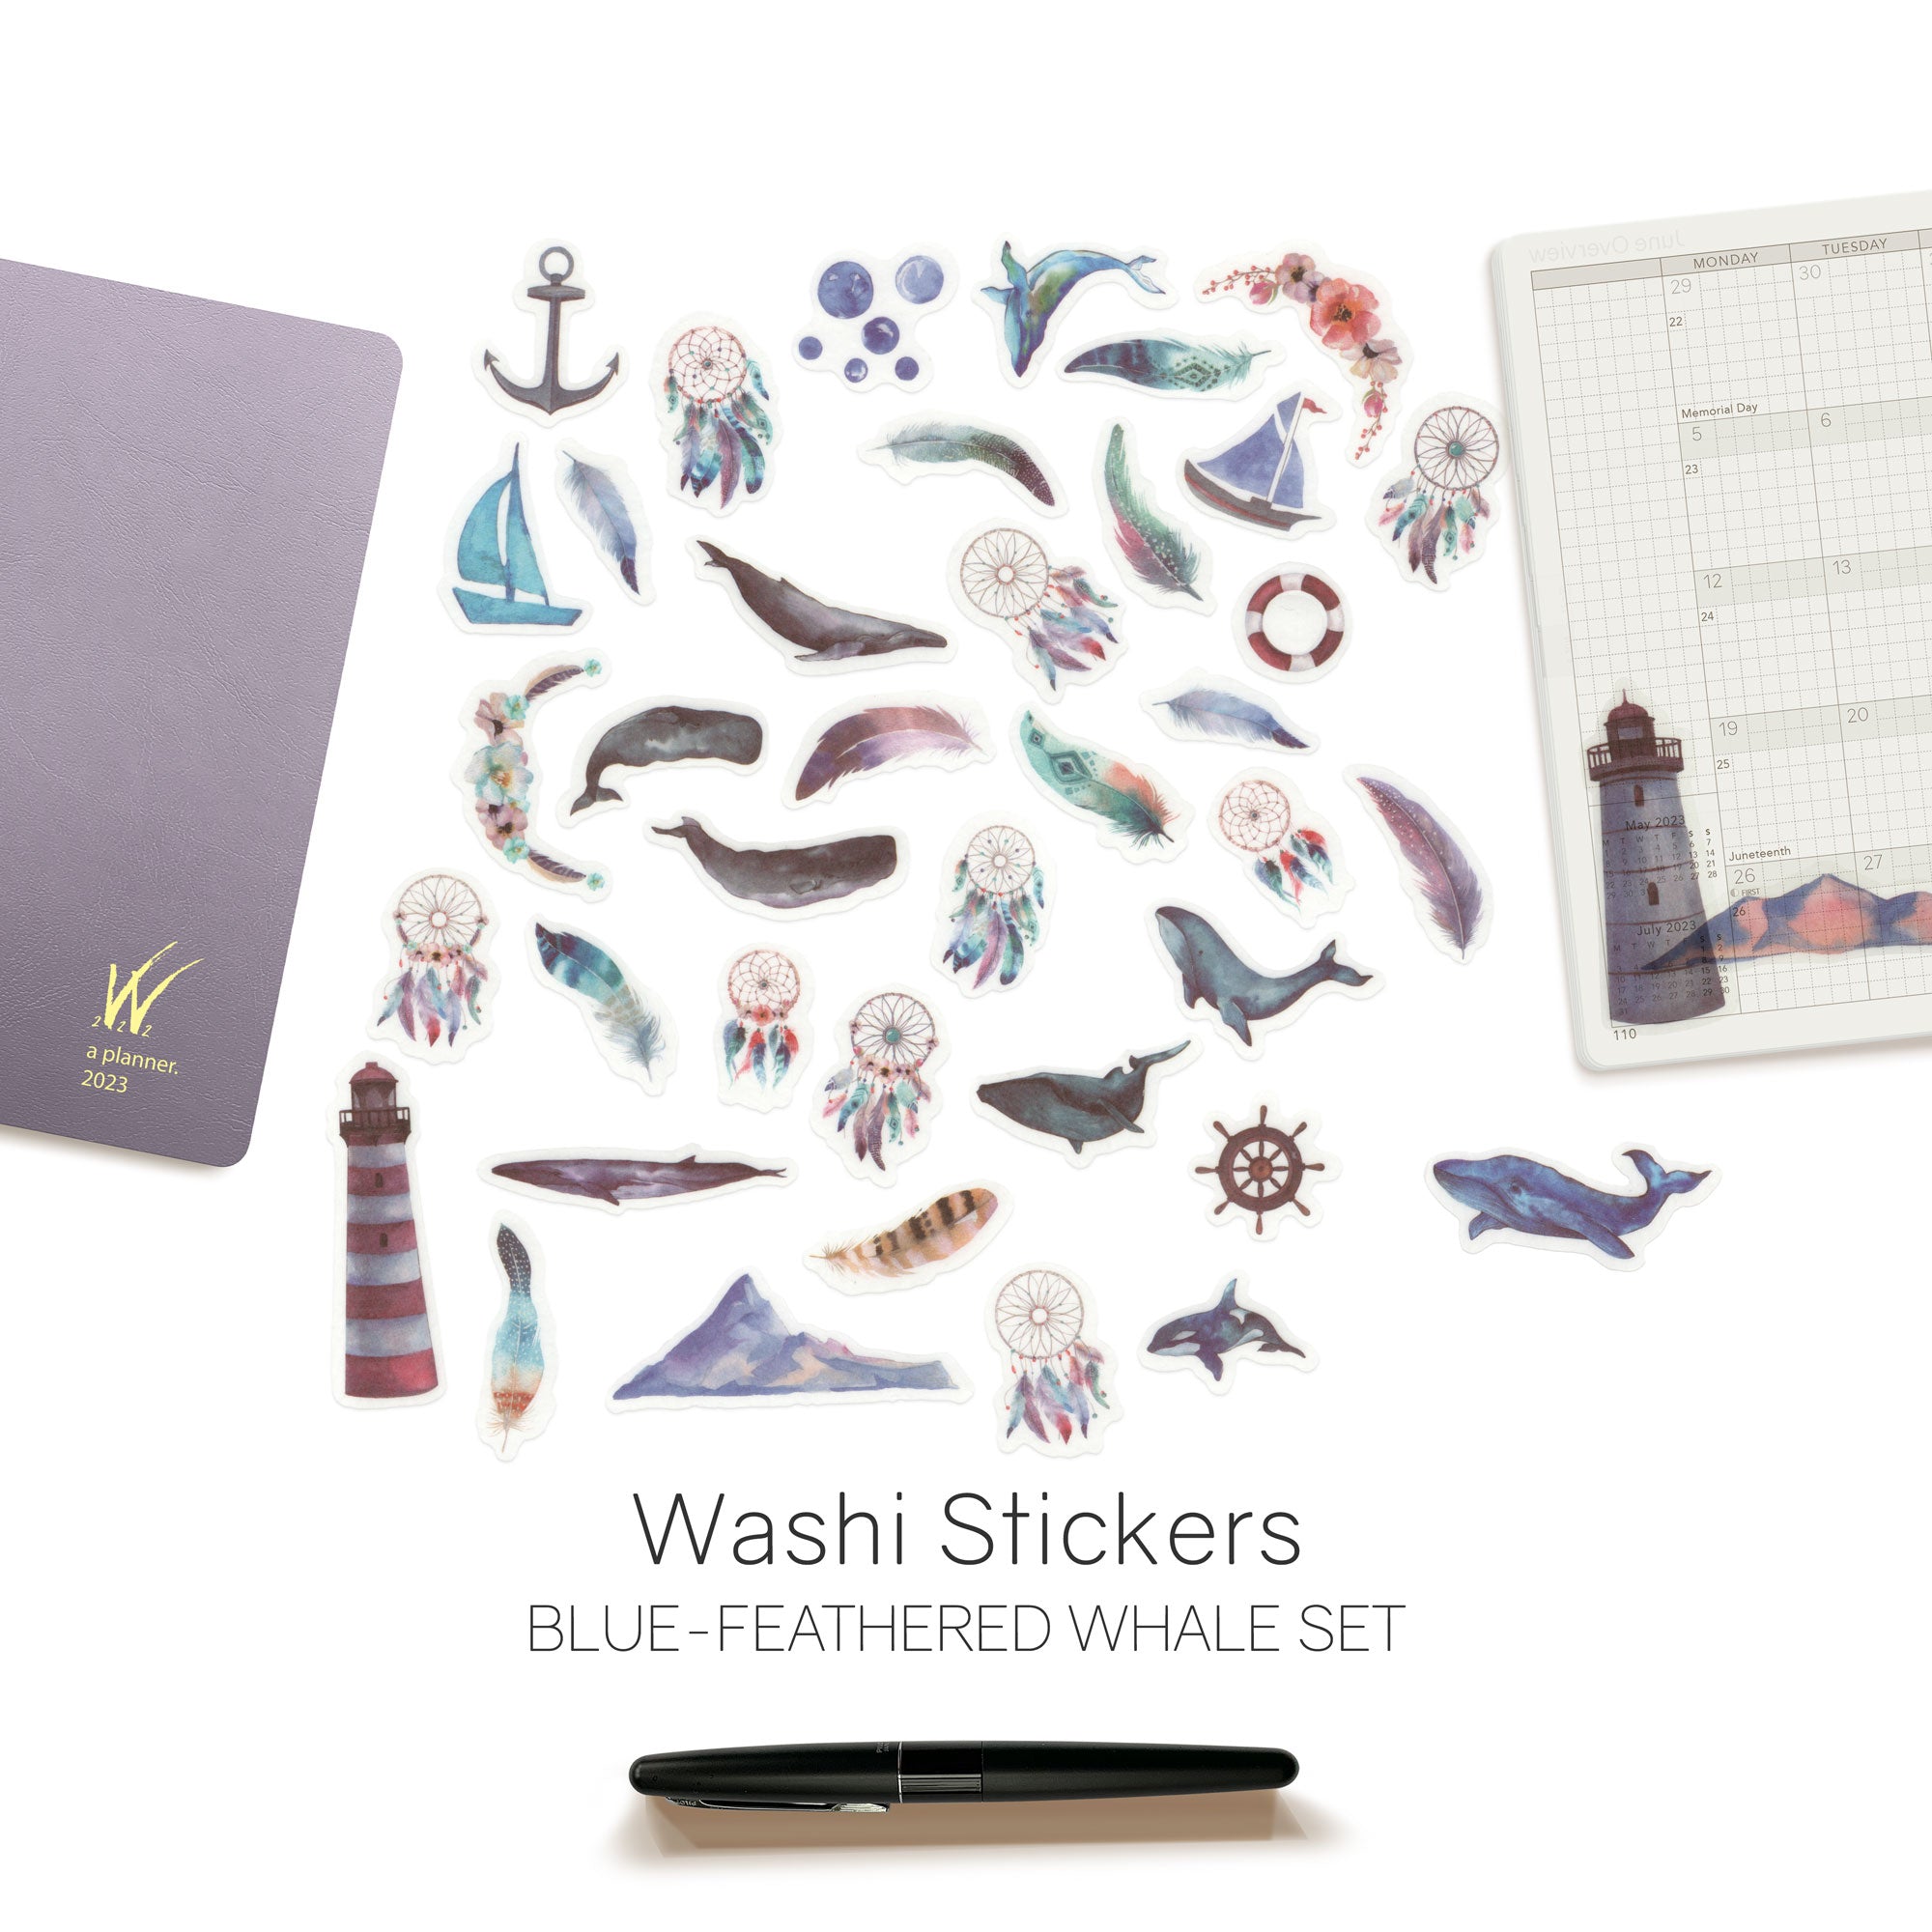 Watercolor - Washi Stickers – Wonderland222